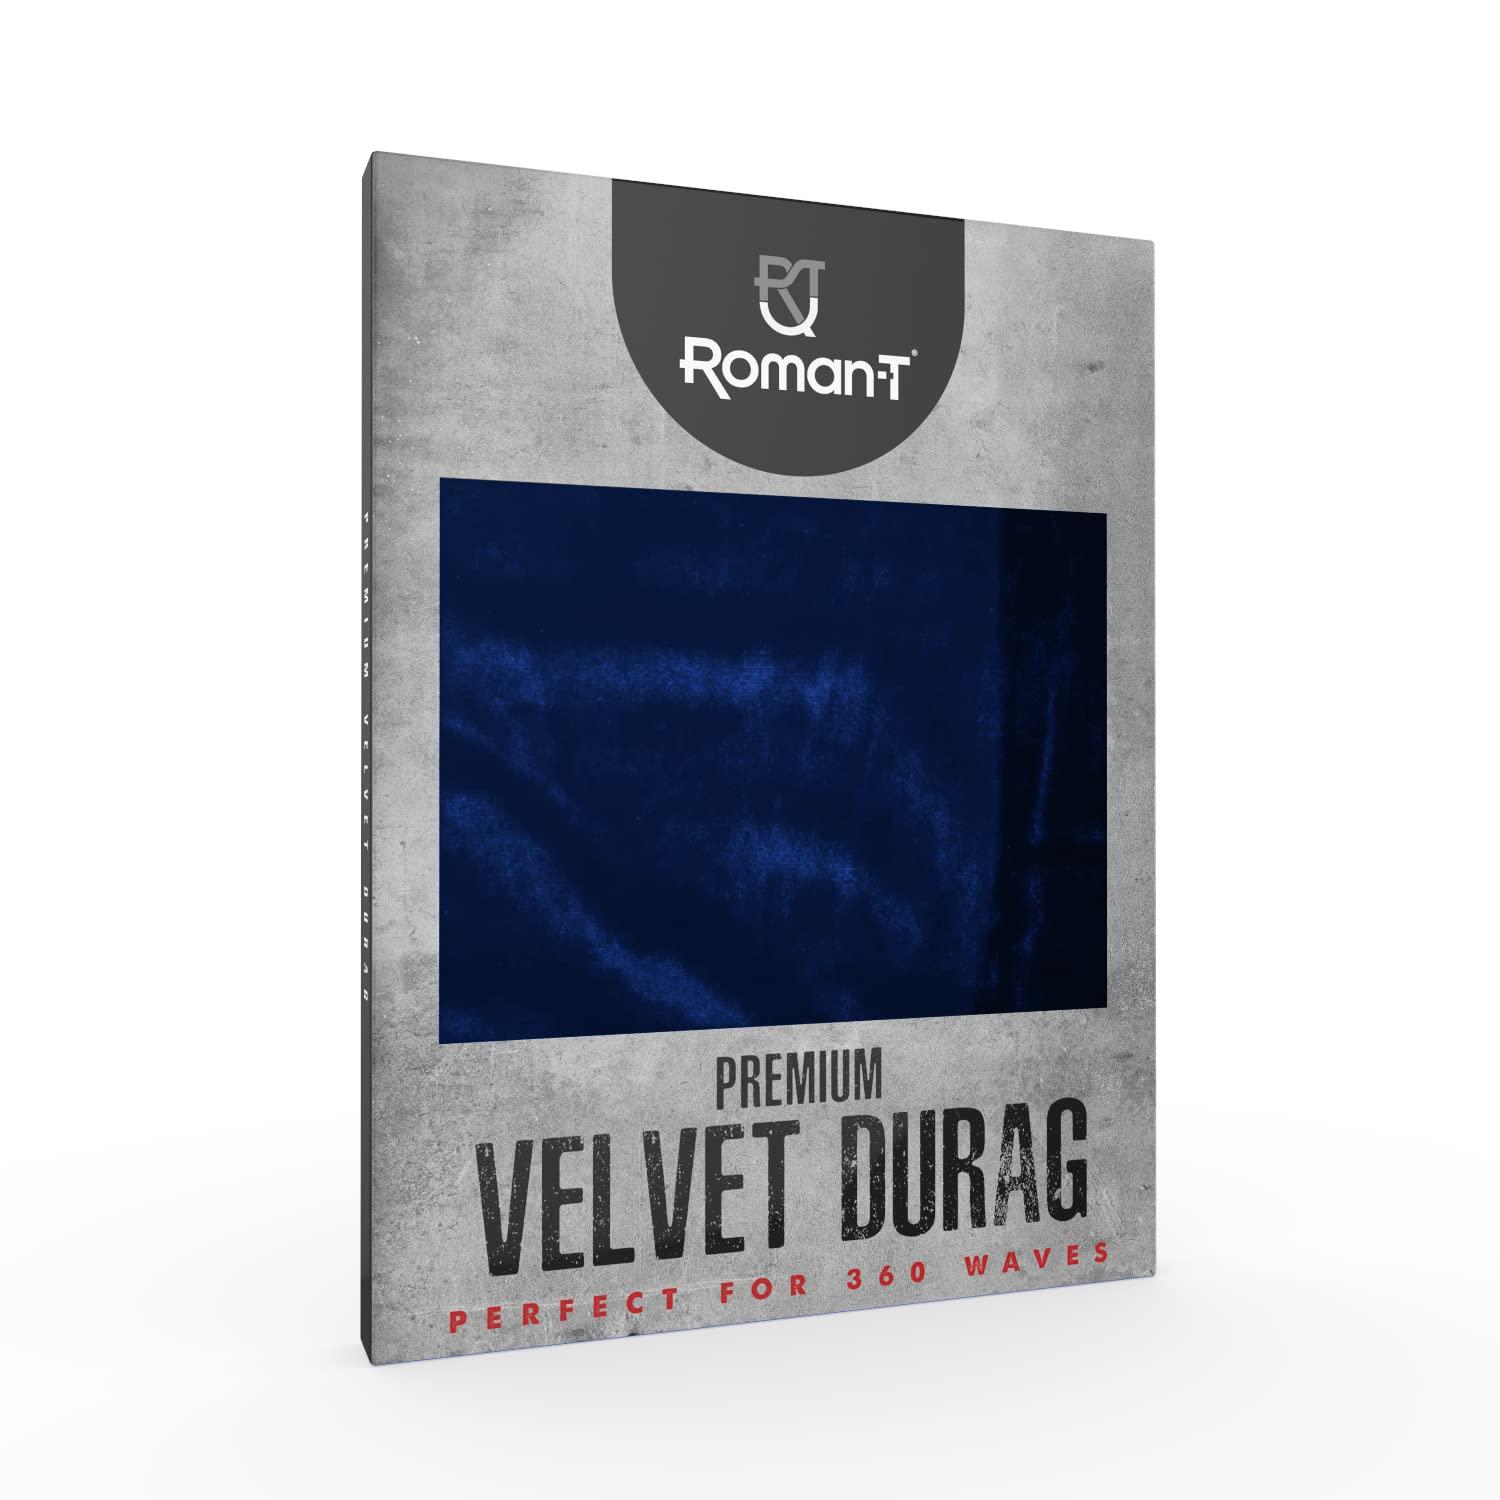  Roman-T Premium Velvet Durag for Men and Women, for, 360  Waves, Curls, Dreadlocks, and Locks, Long & Wide Tails, Ultra Soft and  Comfortable du rag for Custom Hair Styling 